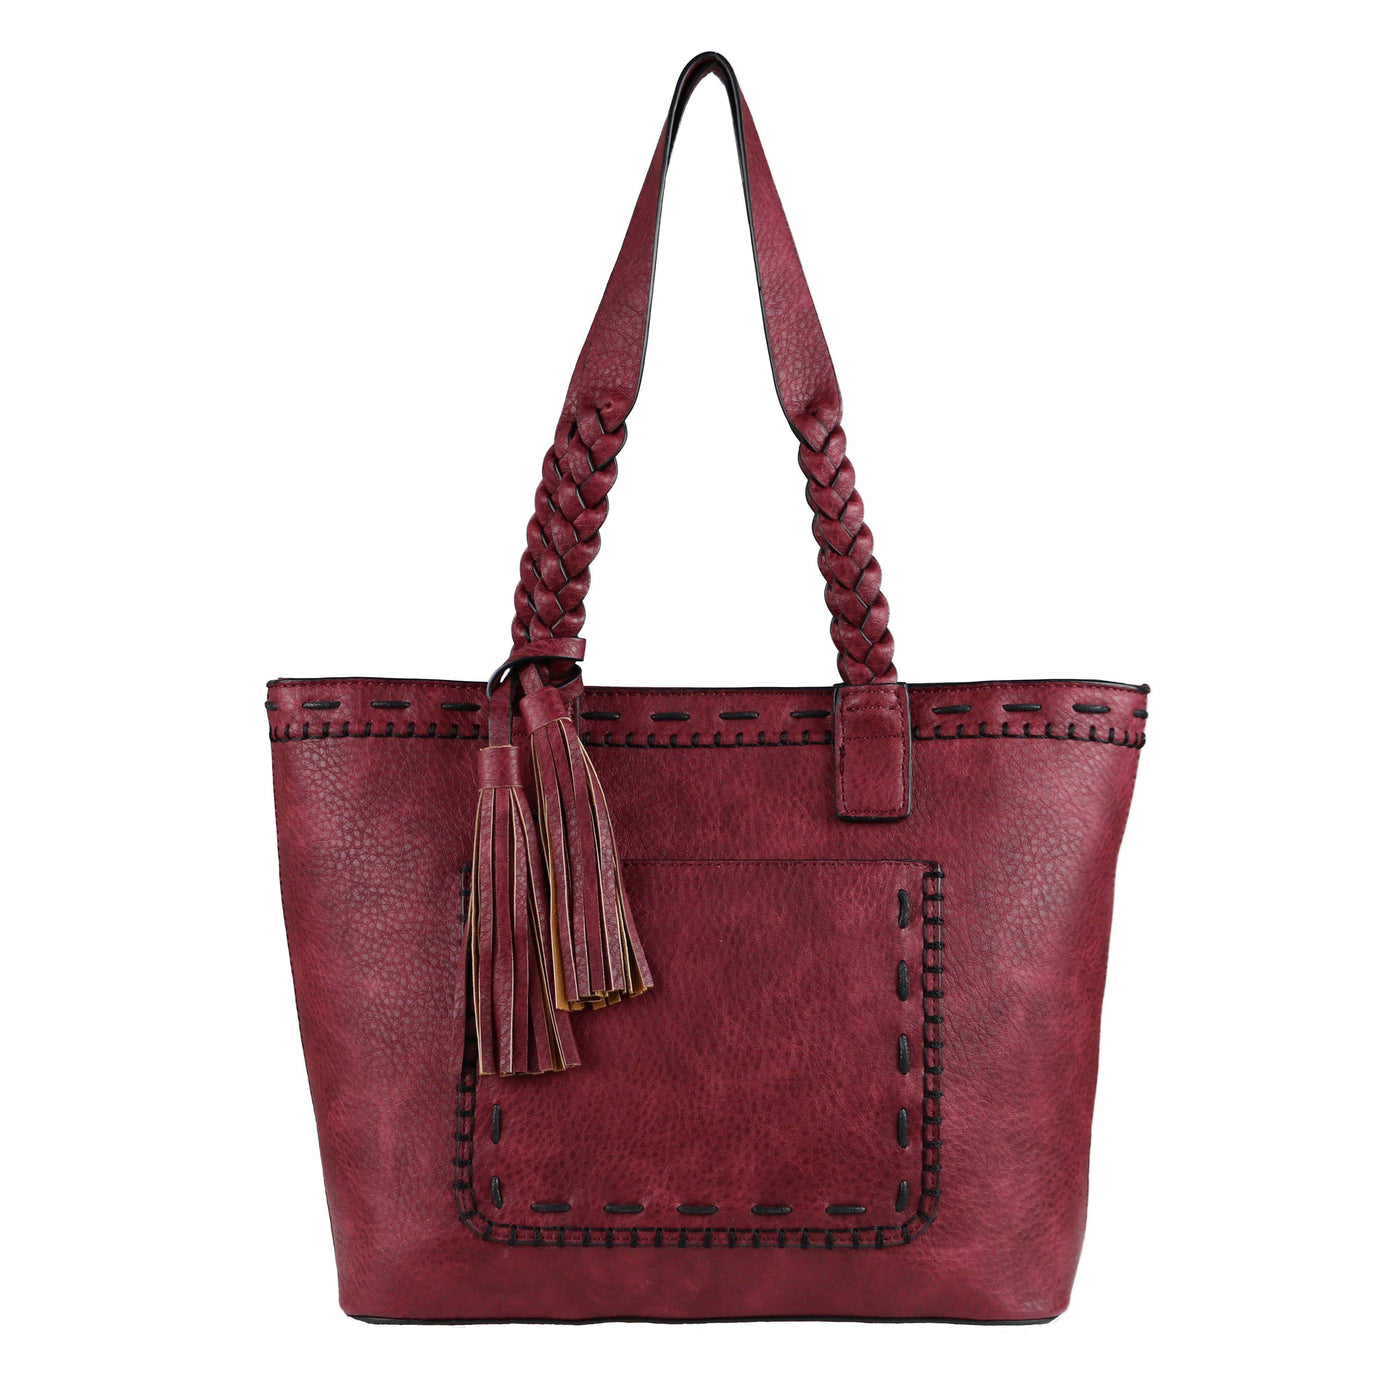 Handbags Clearance Sale | Designer Purse Sale - A-SHU.CO.UK – tagged 